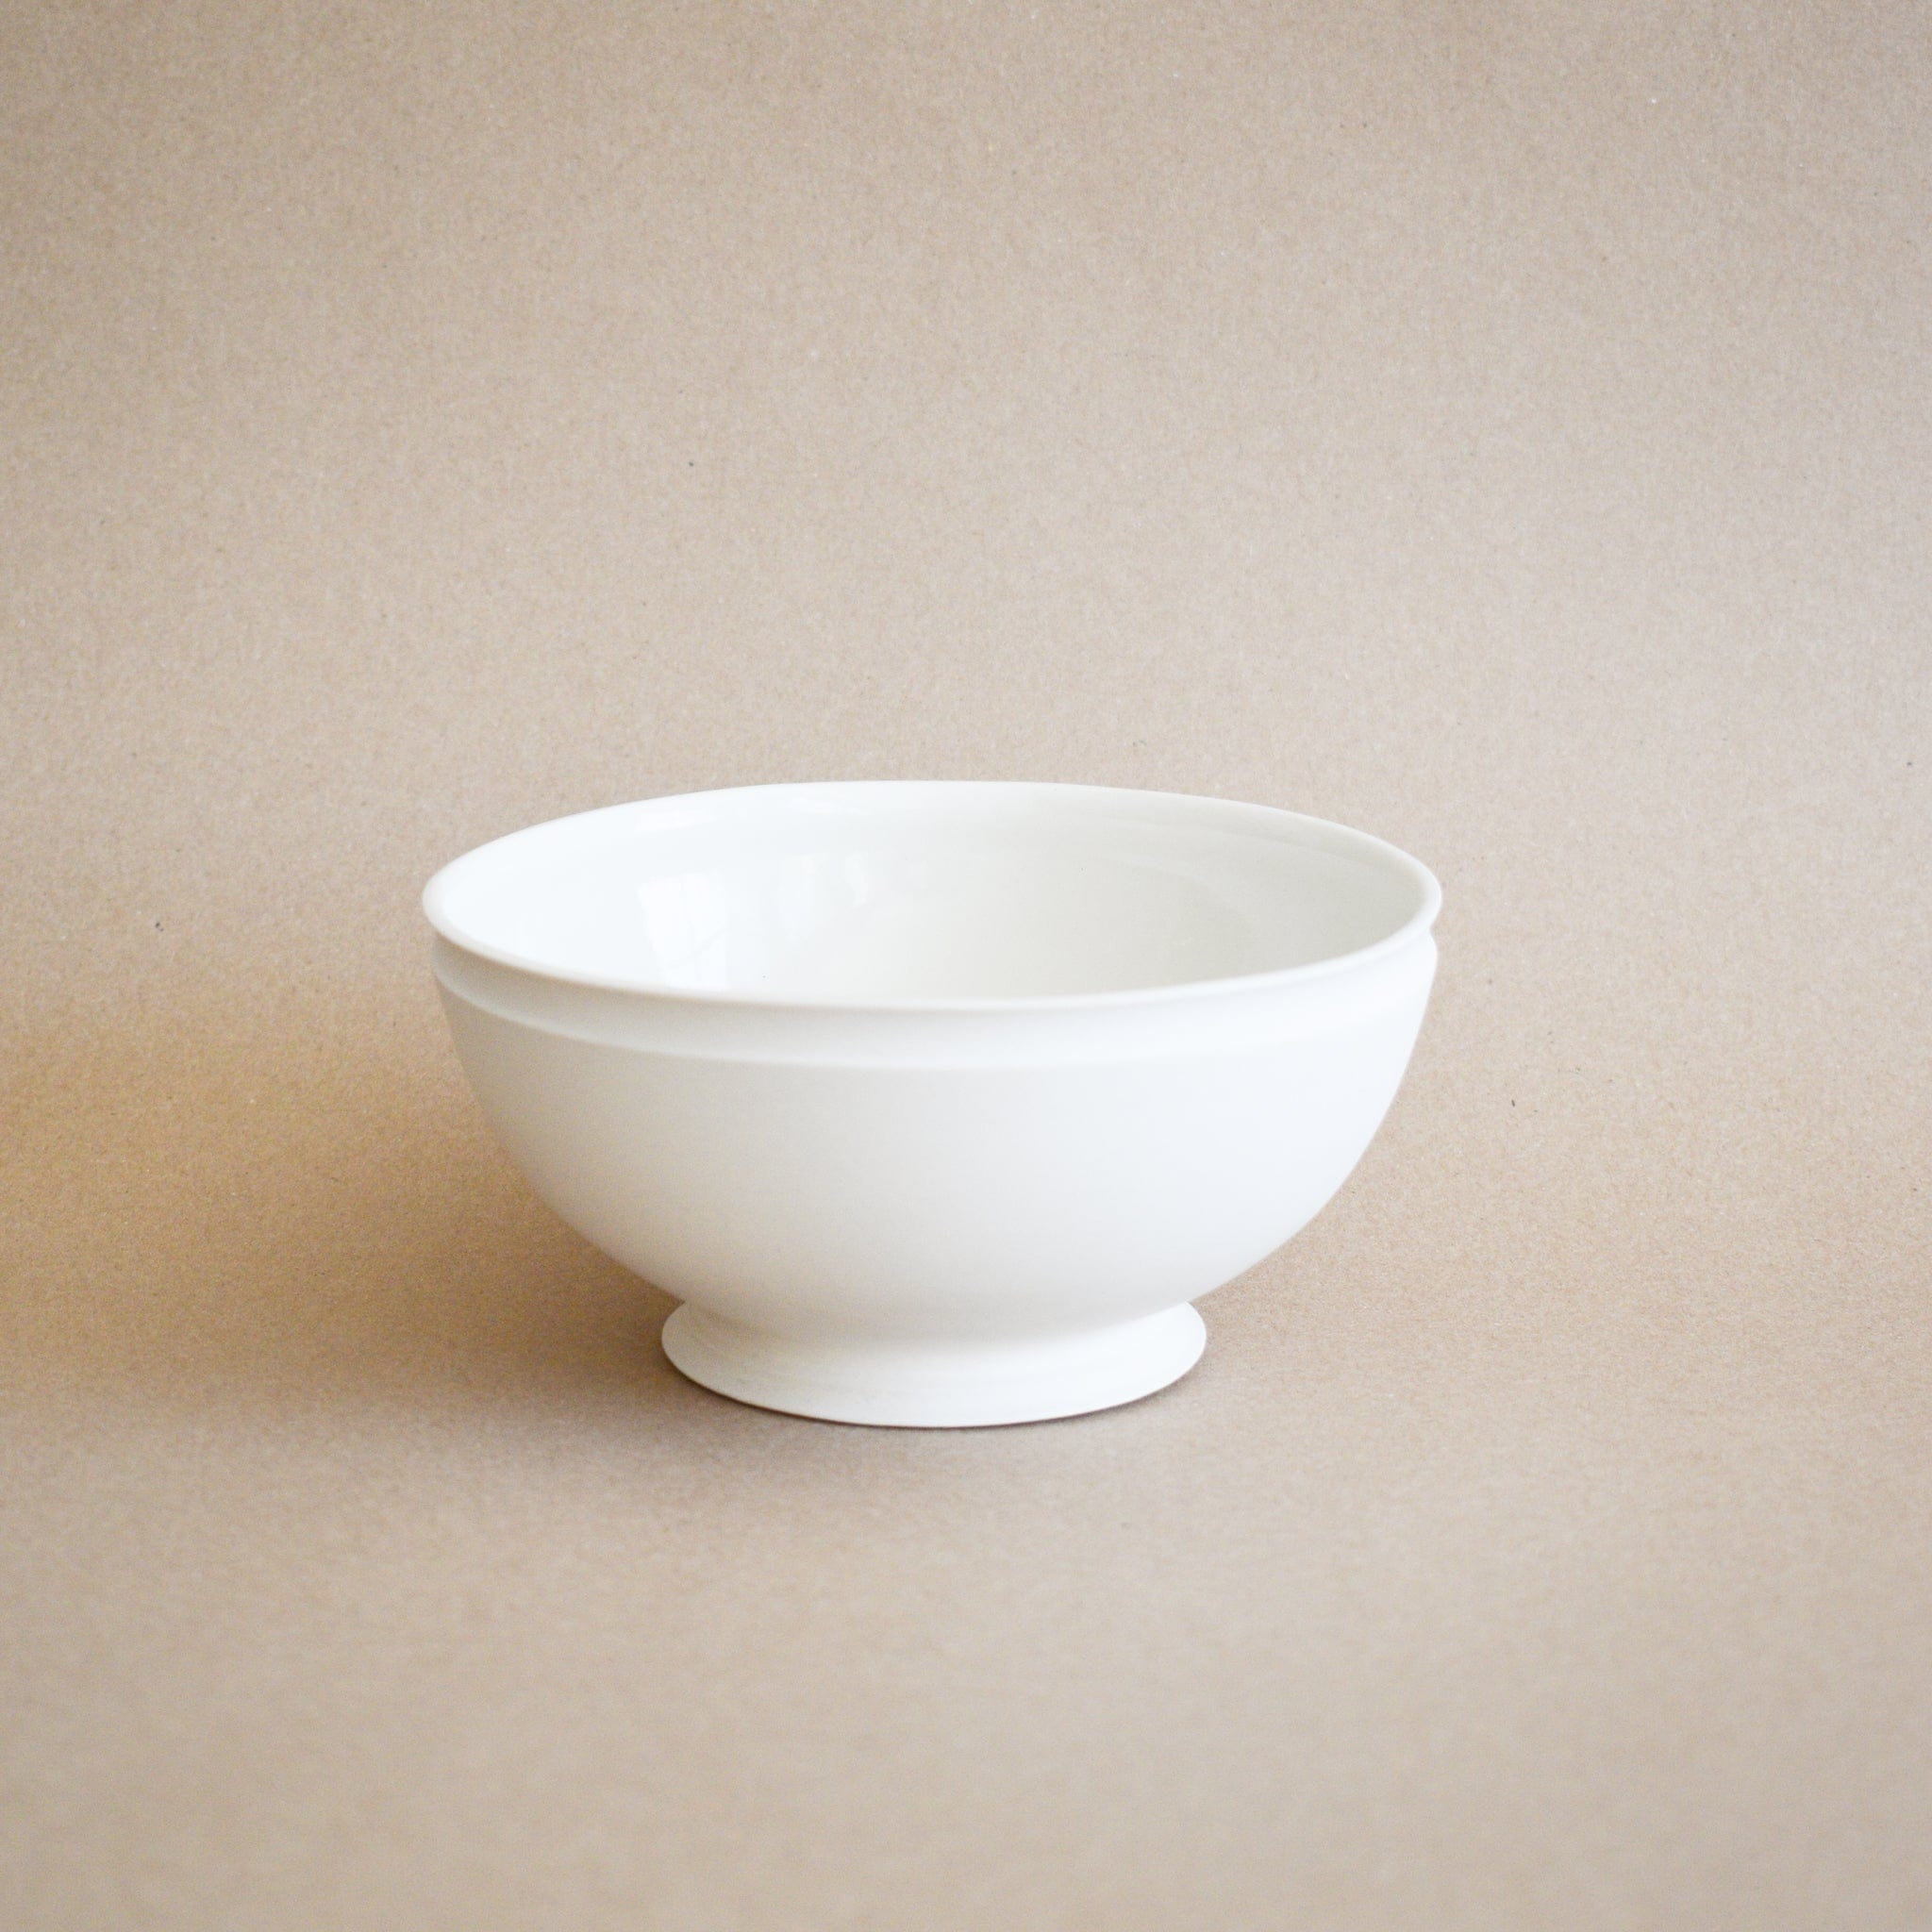 Marcie McGoldrick Bowls White / Large Footed Porcelain Bowl